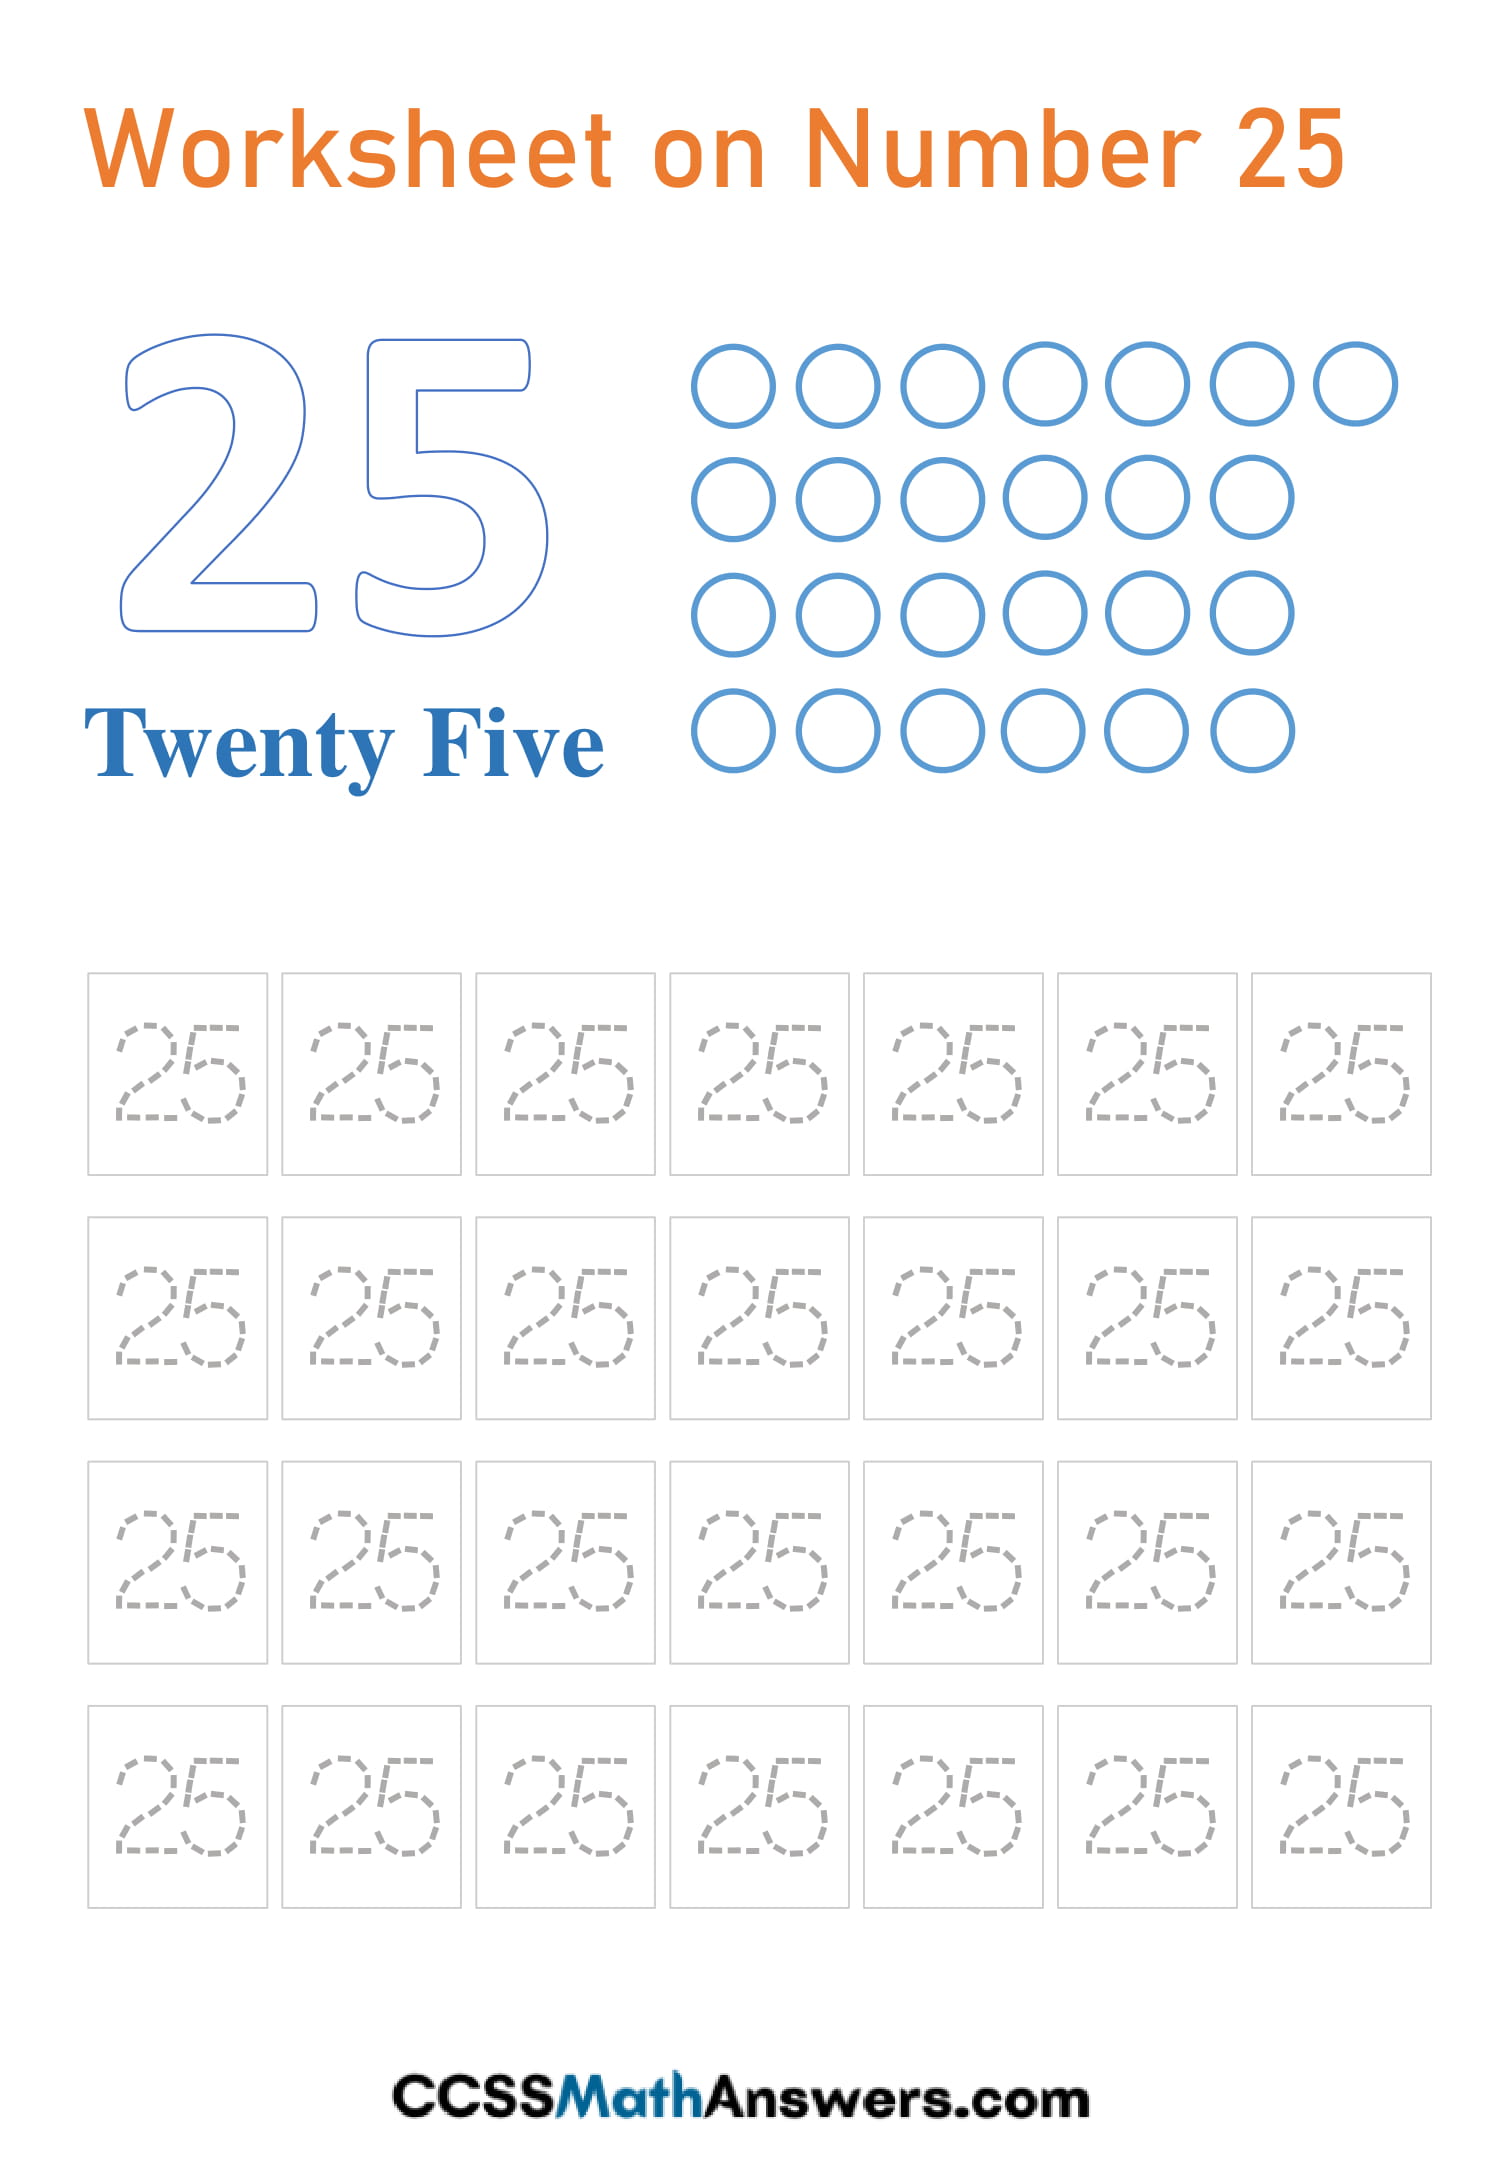 Printable Worksheet On Number 25 Kindergarten Number Twenty Five Counting Tracing Activity